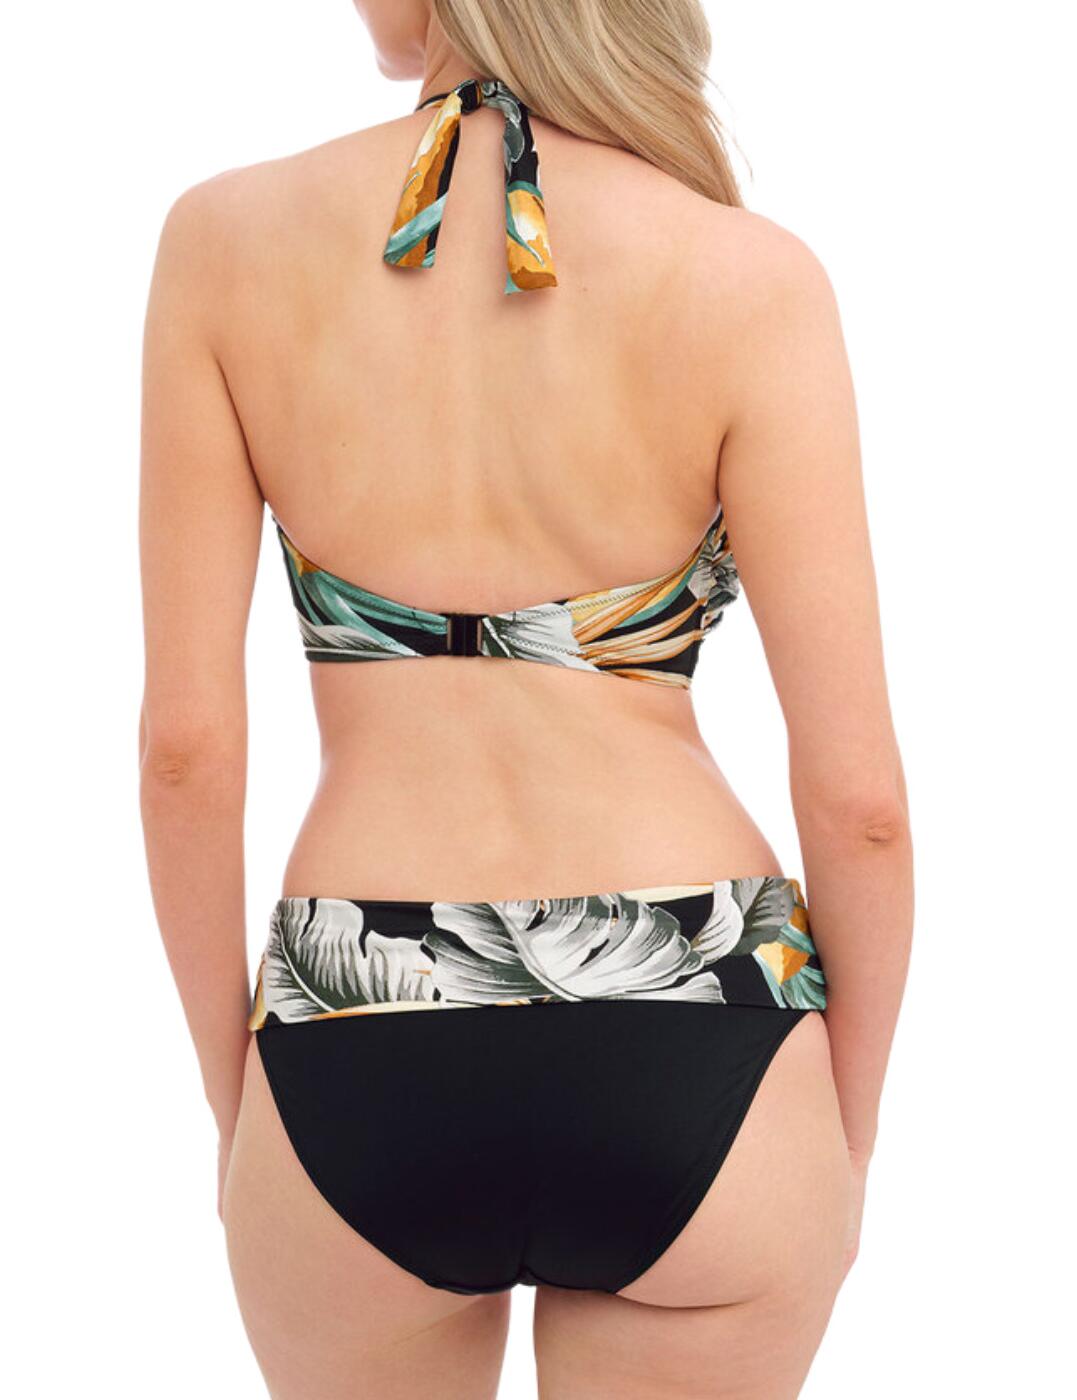 Bamboo Grove Bandeau Bikini Top